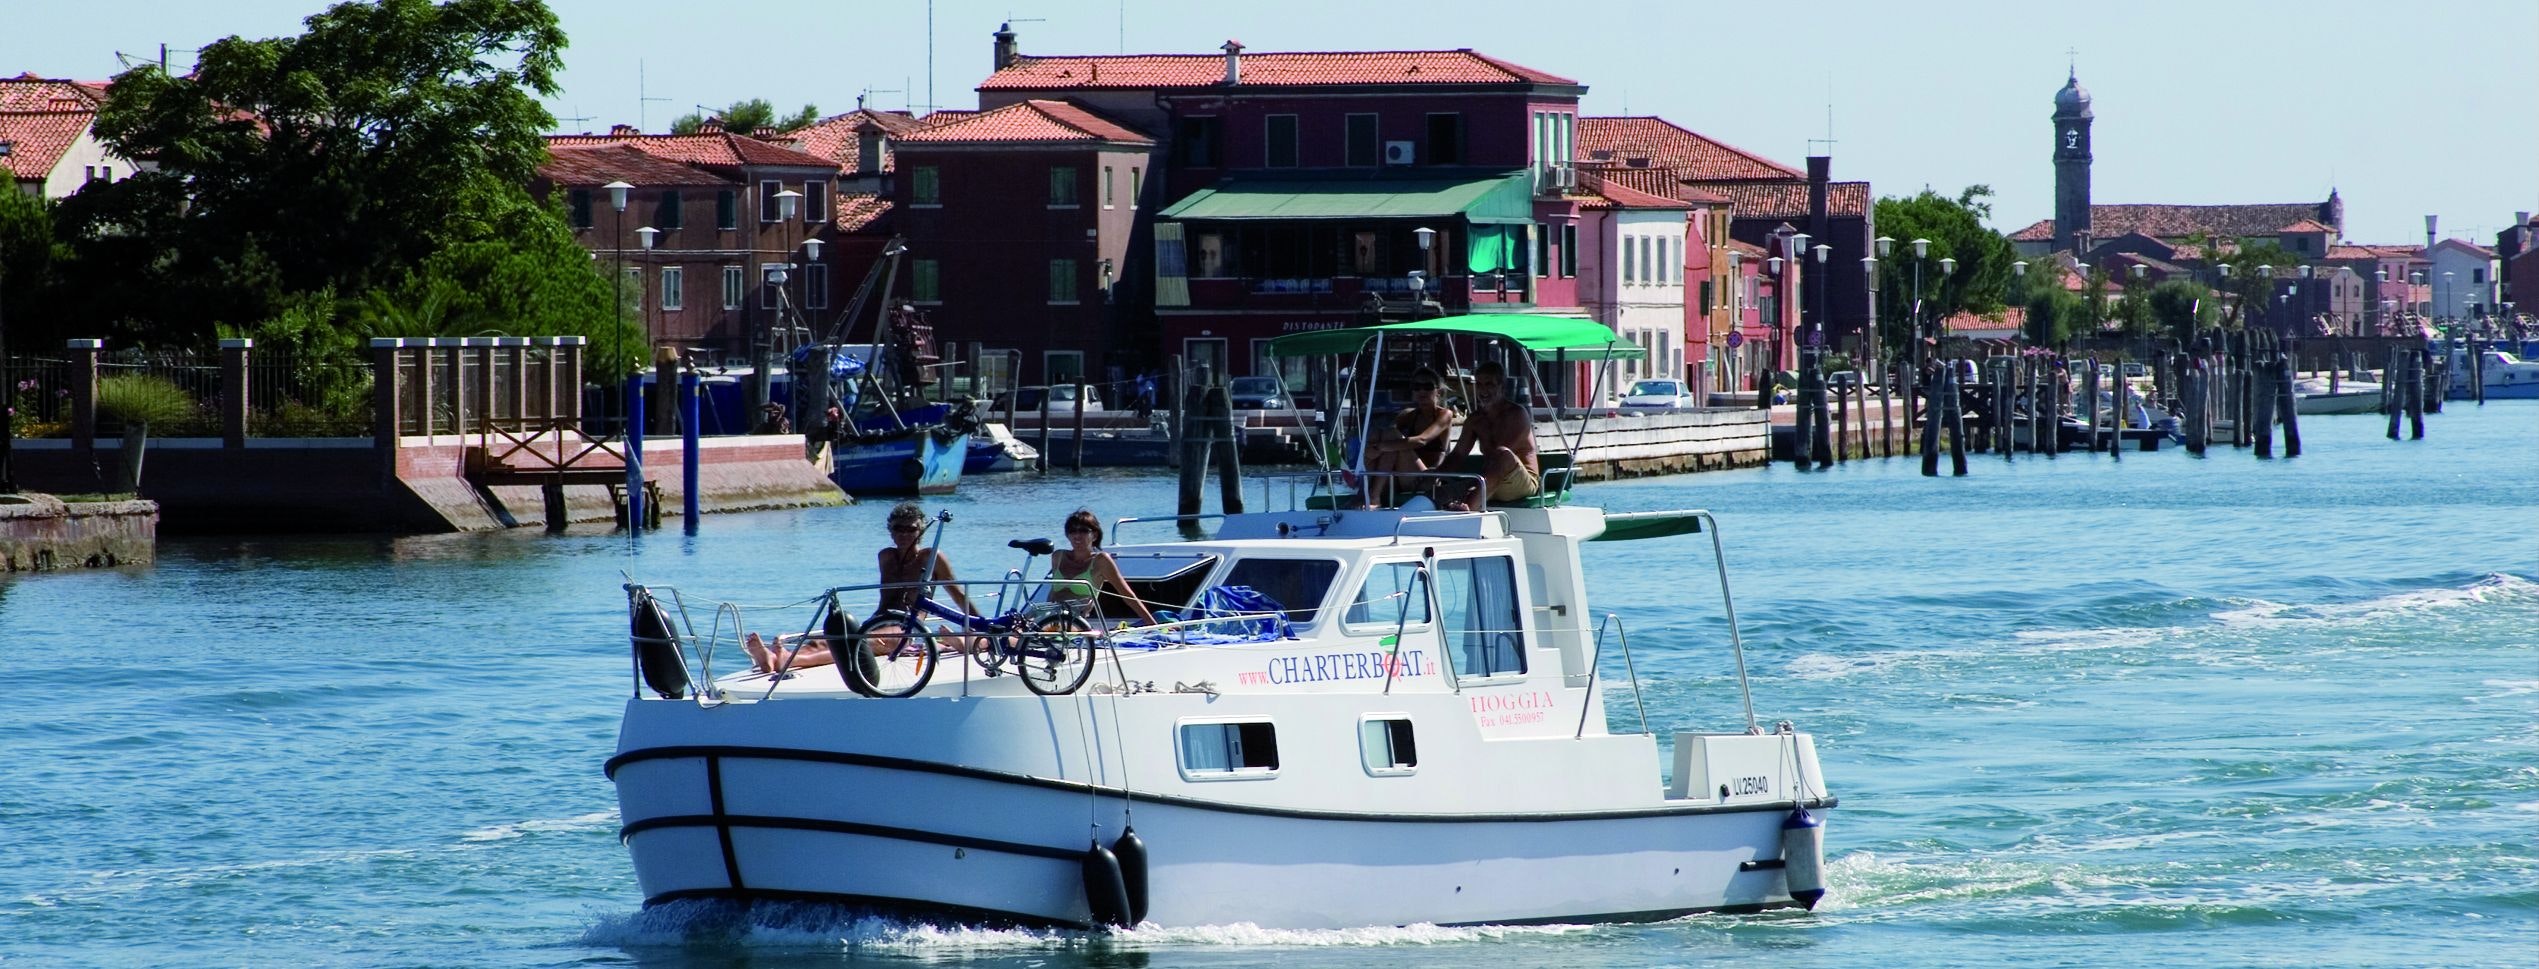 People on board a houseboat in the Venetian Lagoon